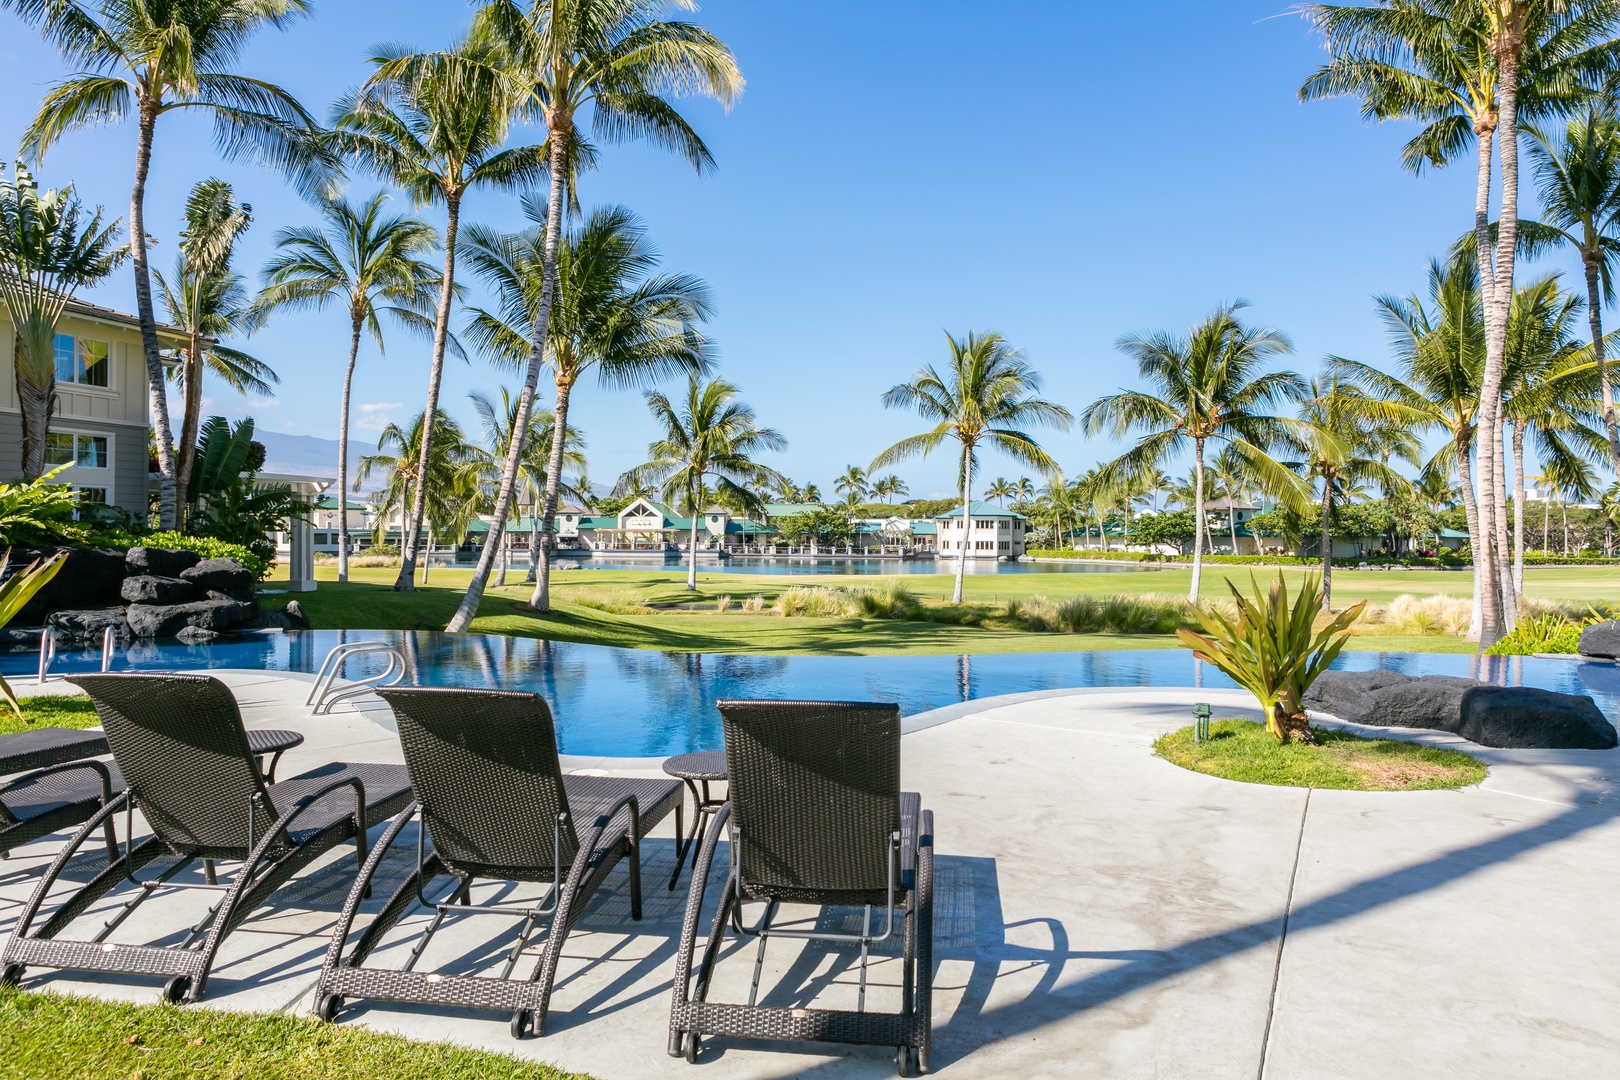 Waikoloa Vacation Rentals, Fairway Villas at Waikoloa Beach Resort E34 - Loungers provided while you sunbathe or read a book